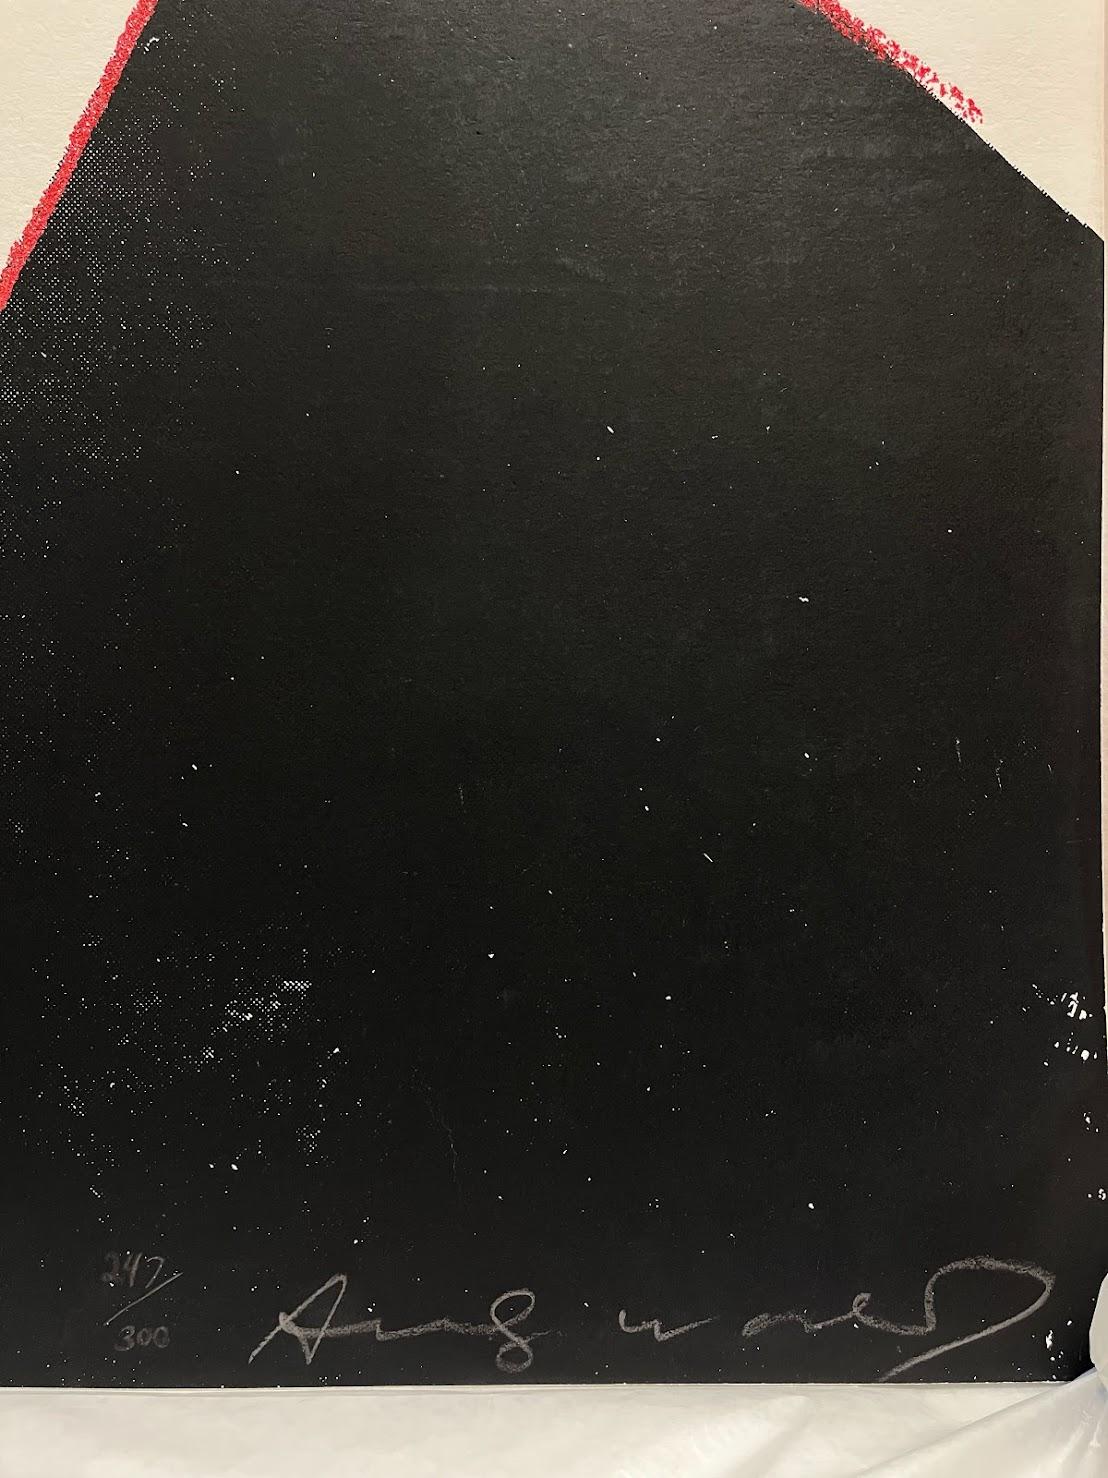 Andy Warhol 'Edward Kennedy' Signed Screenprint 1980  For Sale 1